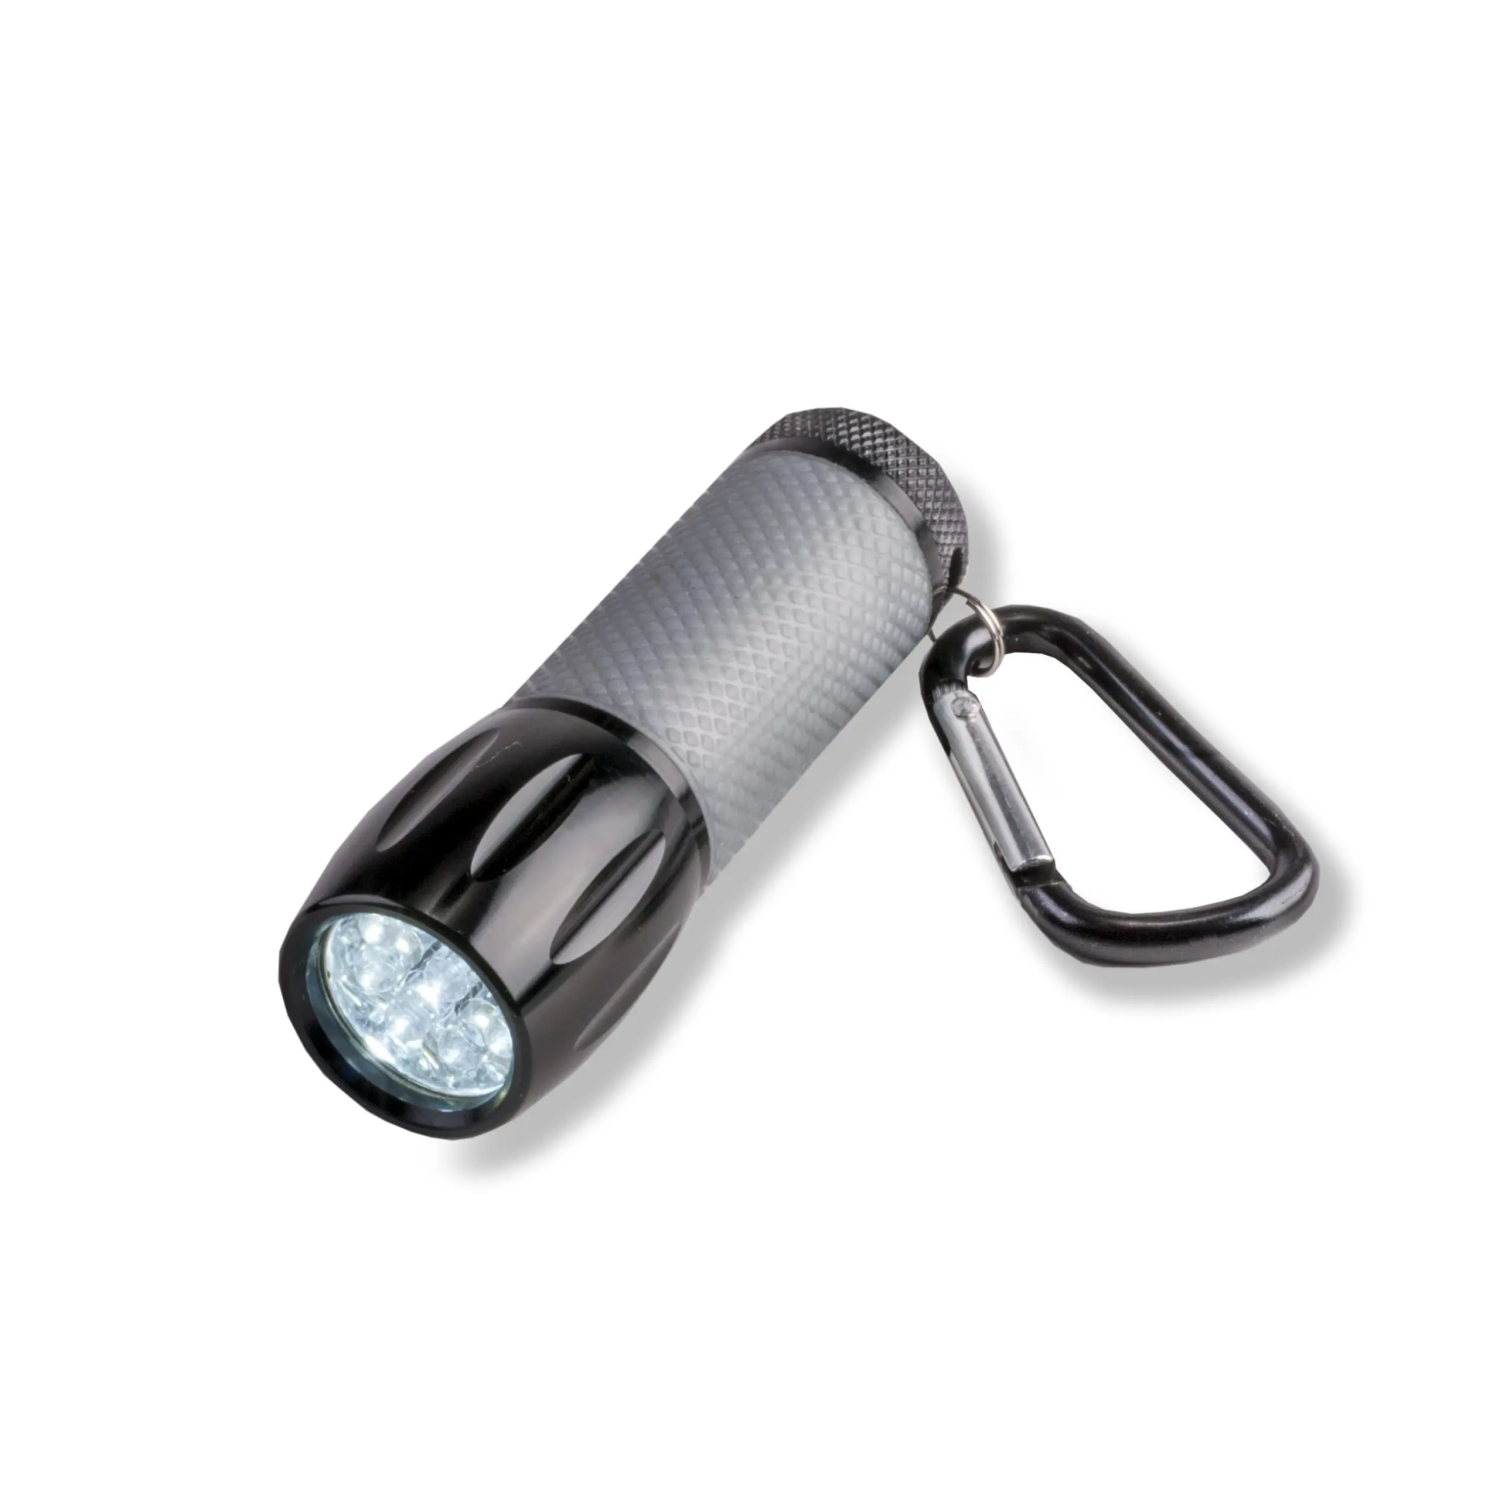 Image of the SL-55, LEDSight Pro™ Mini LED Flashlight. 